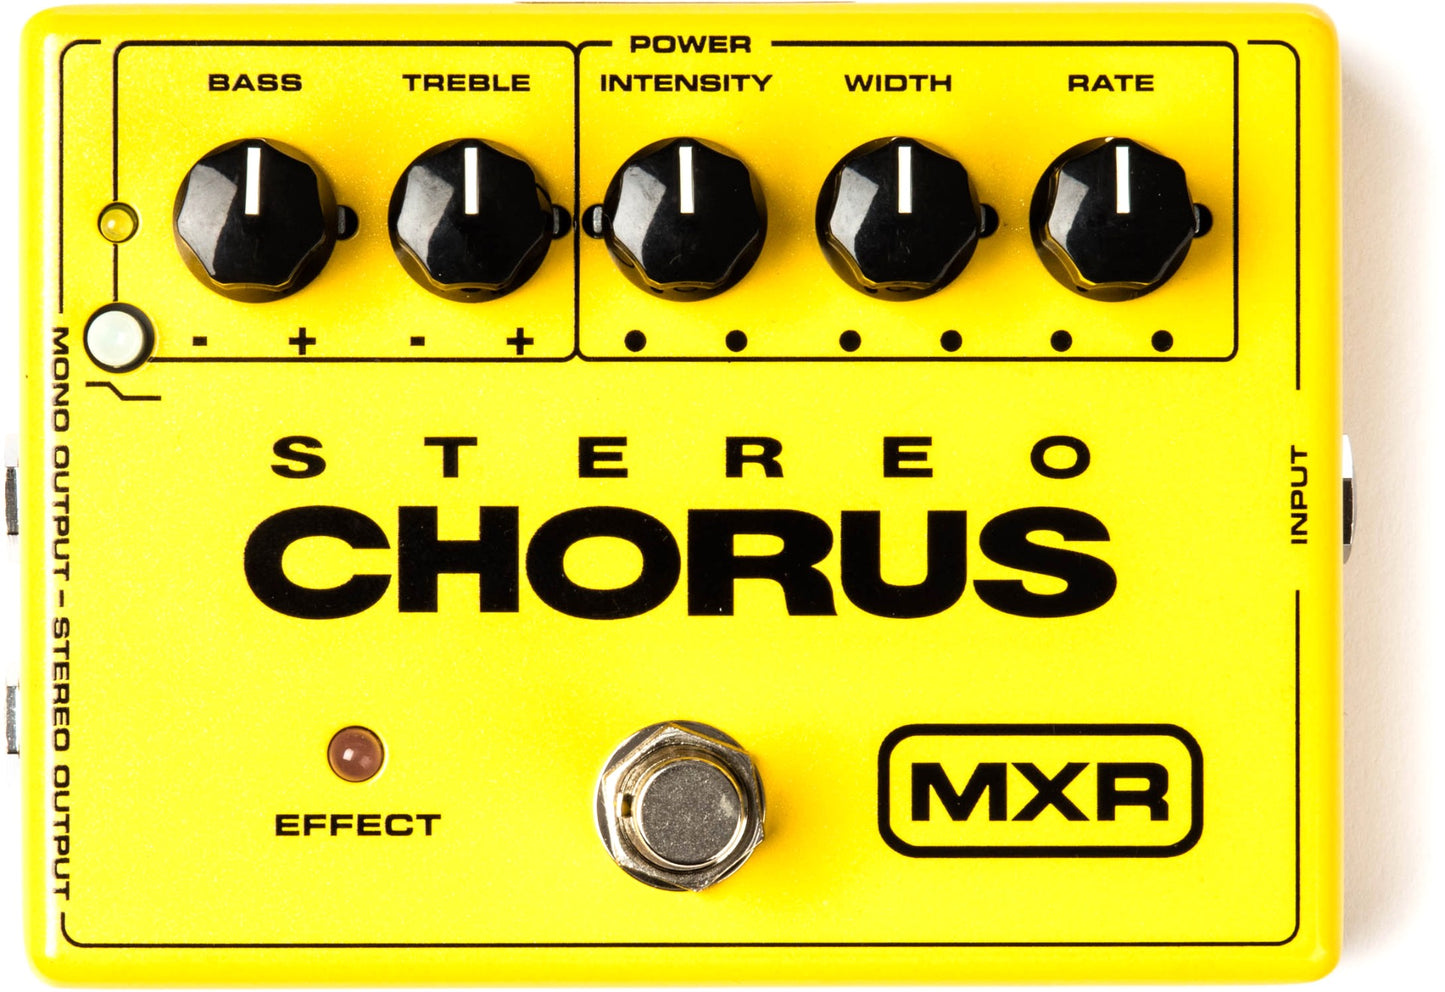 MXR Stereo Chorus M134 Analog Guitar Effect Pedal